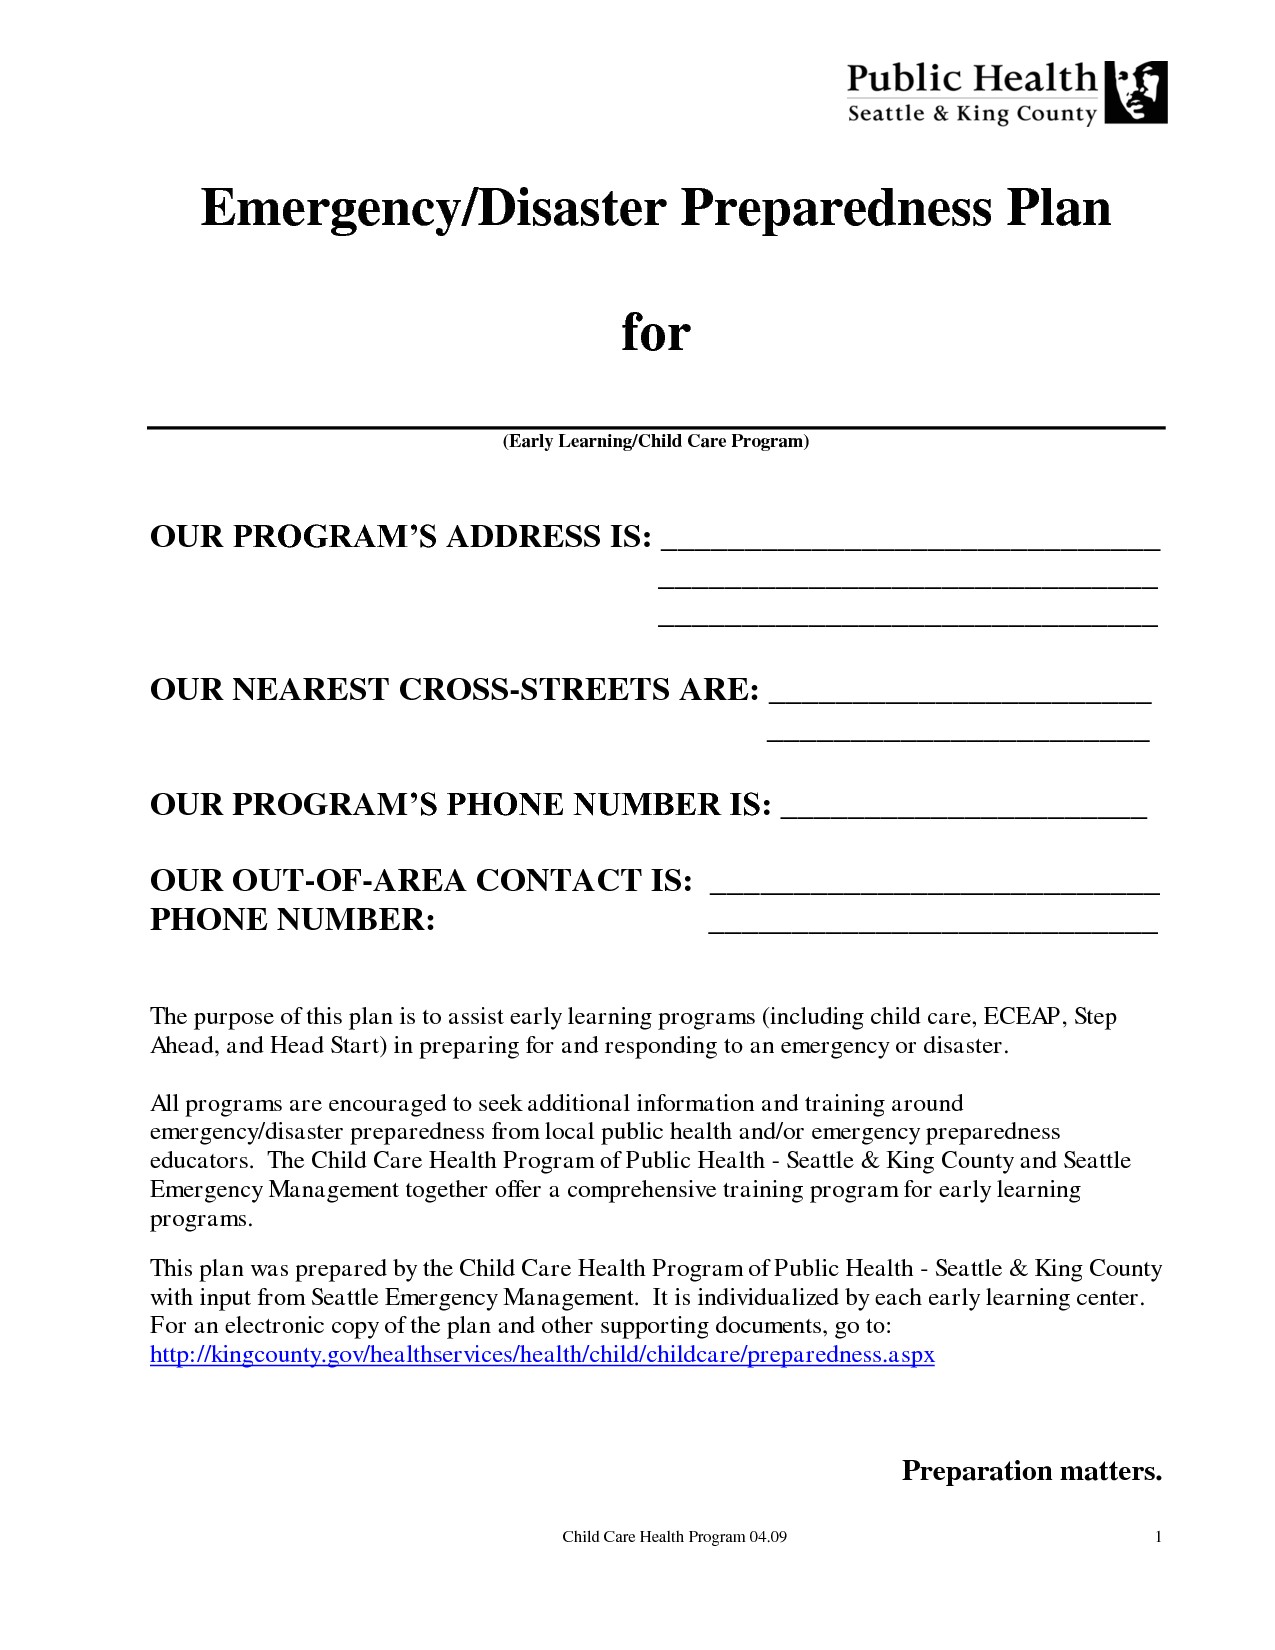 emergency-disaster-plan-for-family-child-care-homes-plougonver